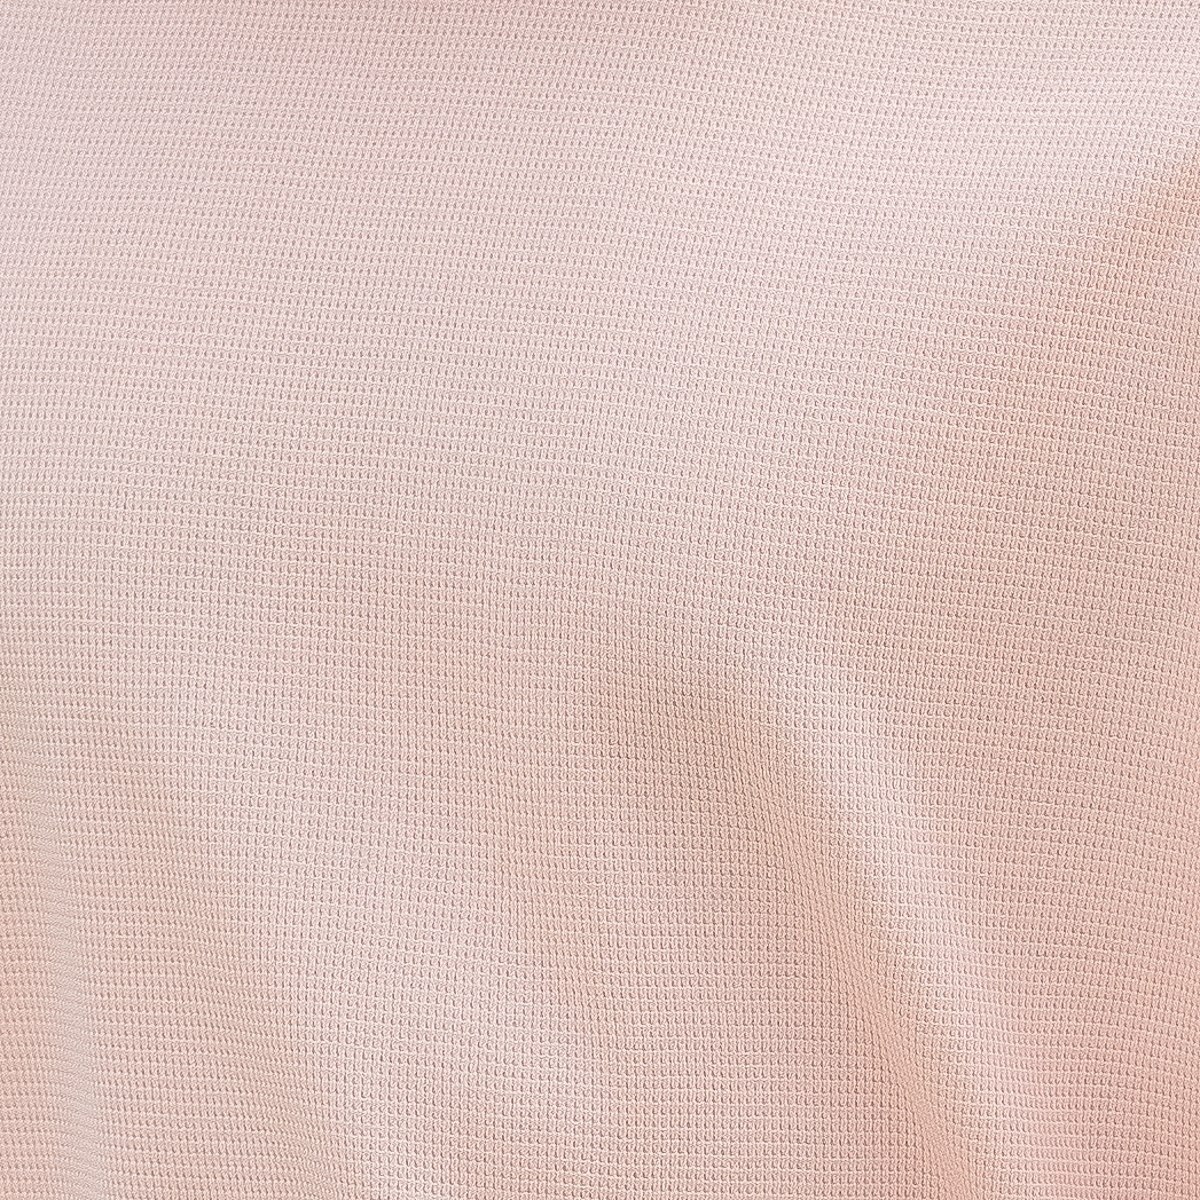 Men's Dotwork Oversize T-Shirt In Soft Pink